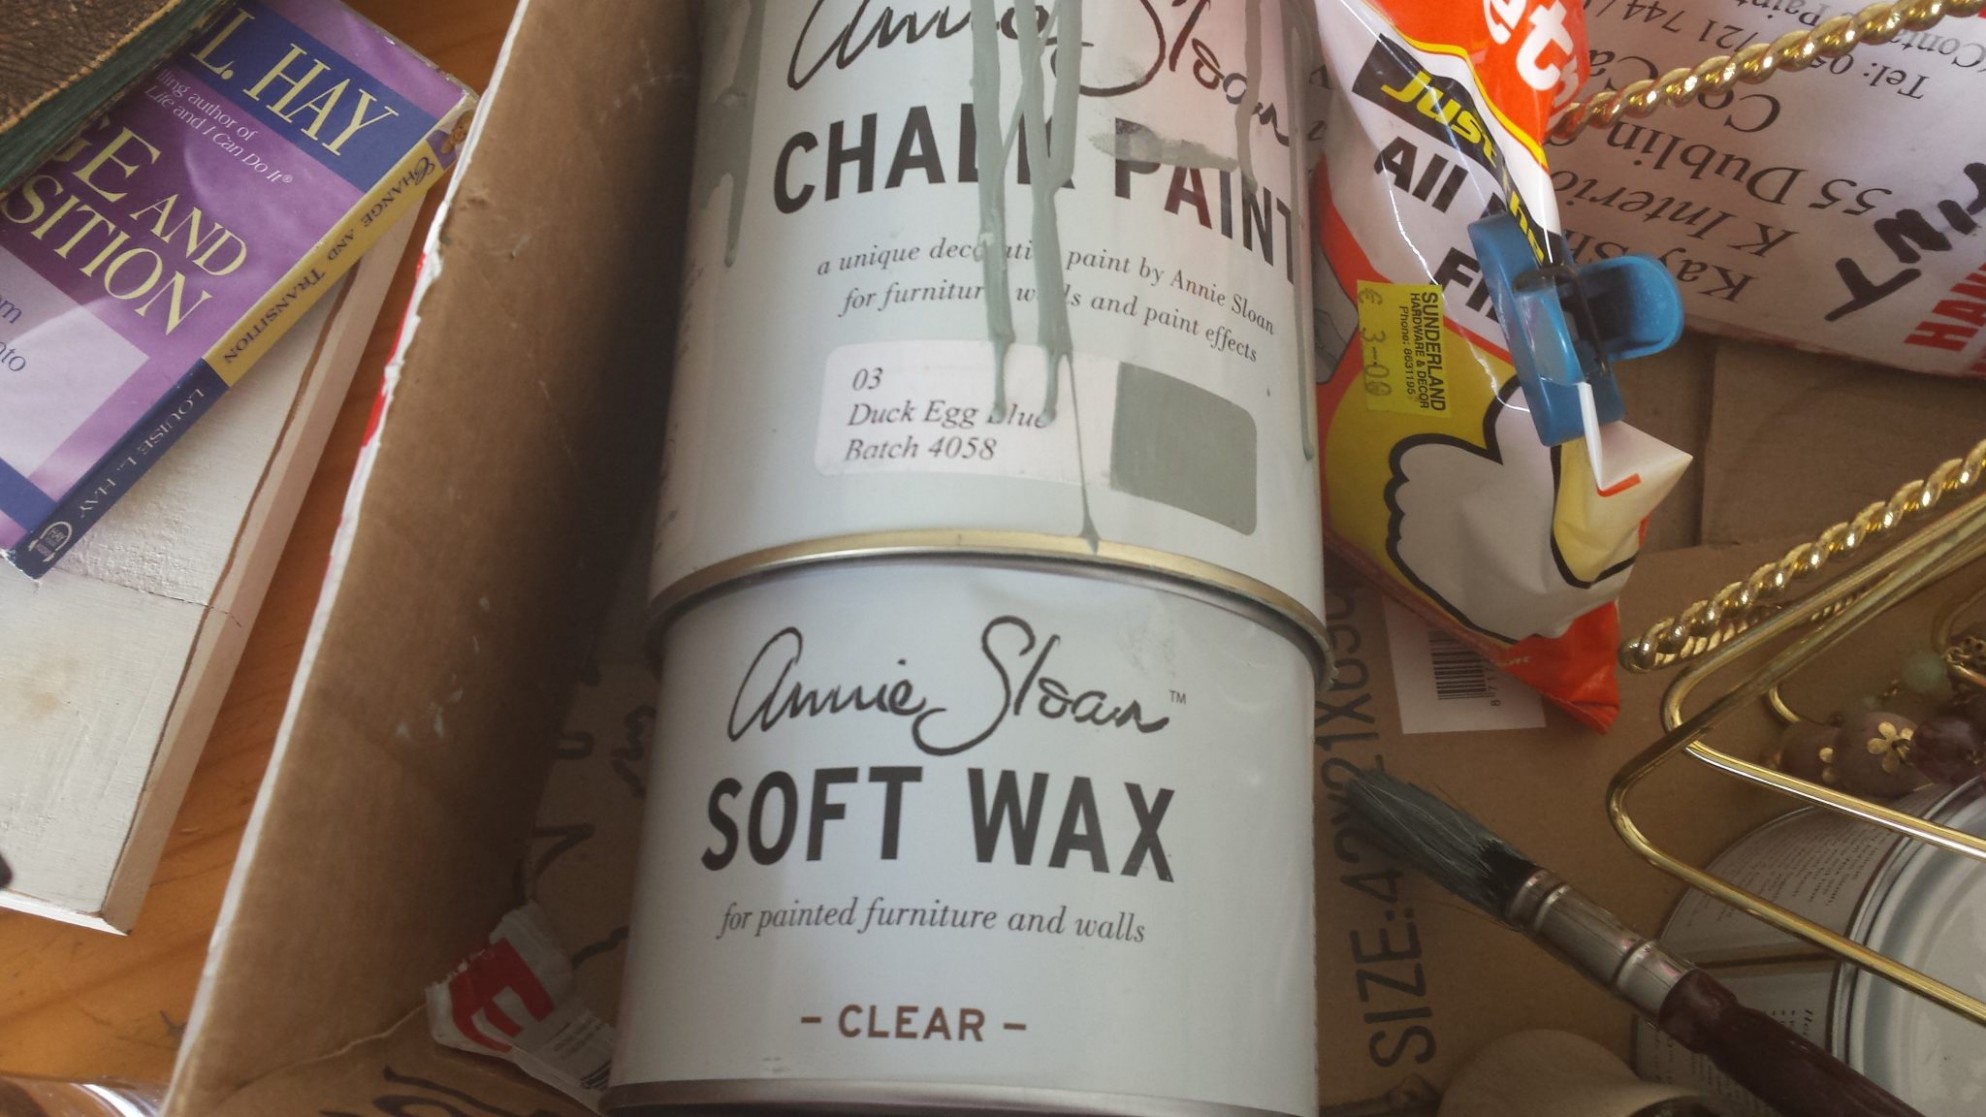 Chalk Paint Up Cycling Furniture Irish Nomad Buy Annie Sloan Chalk Paint Brisbane